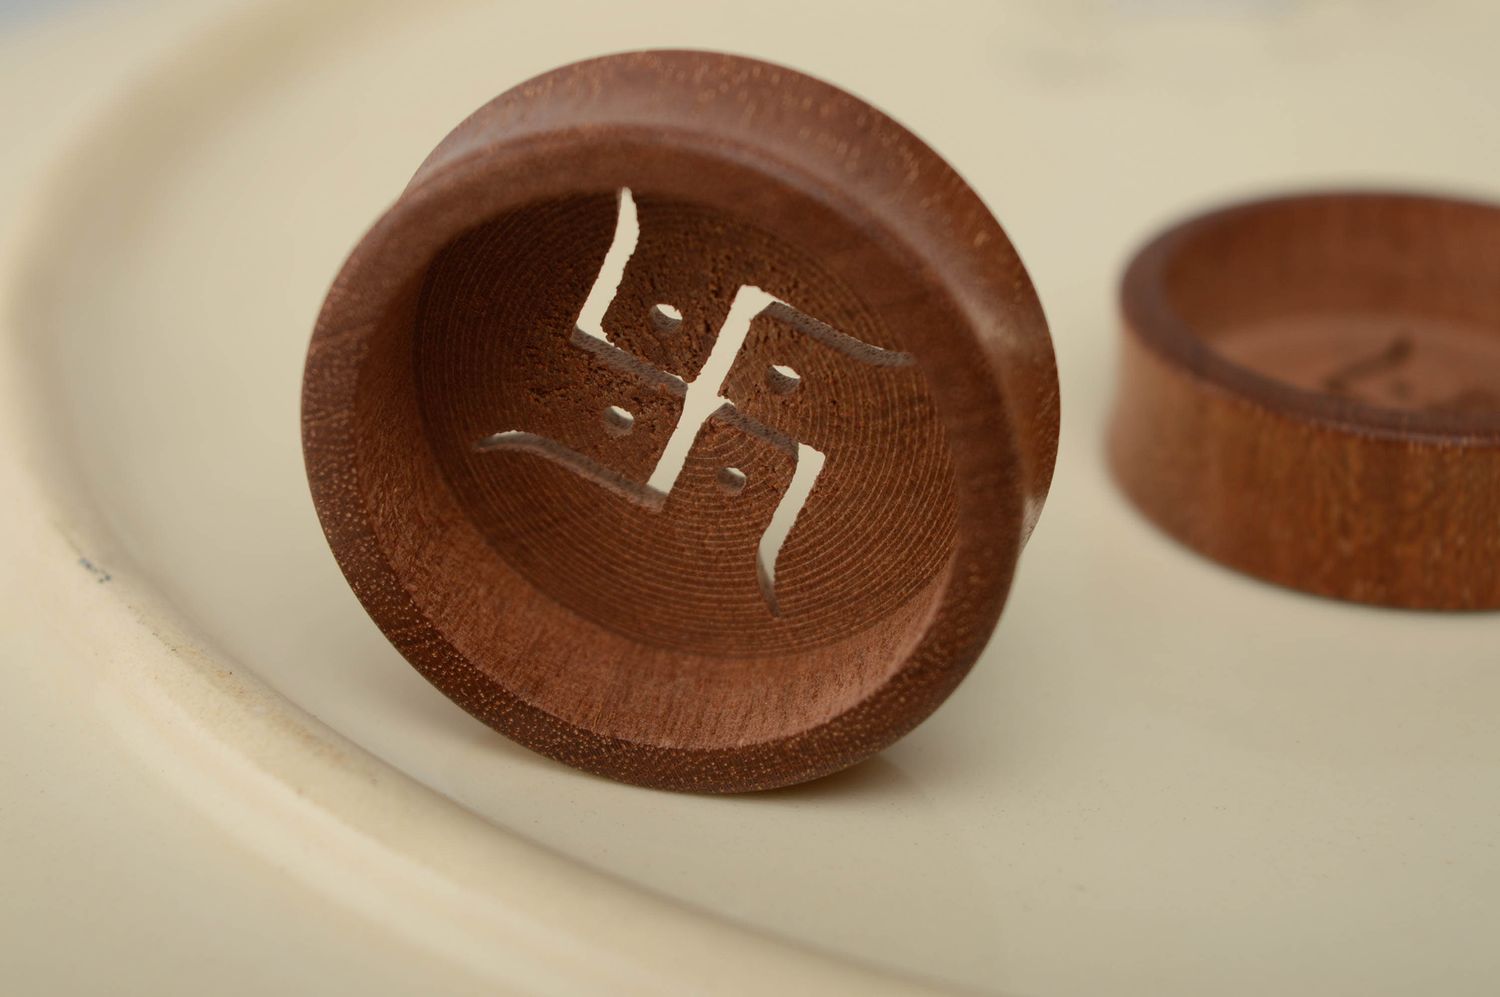 Sapele wood ear plugs with image of swastika photo 1